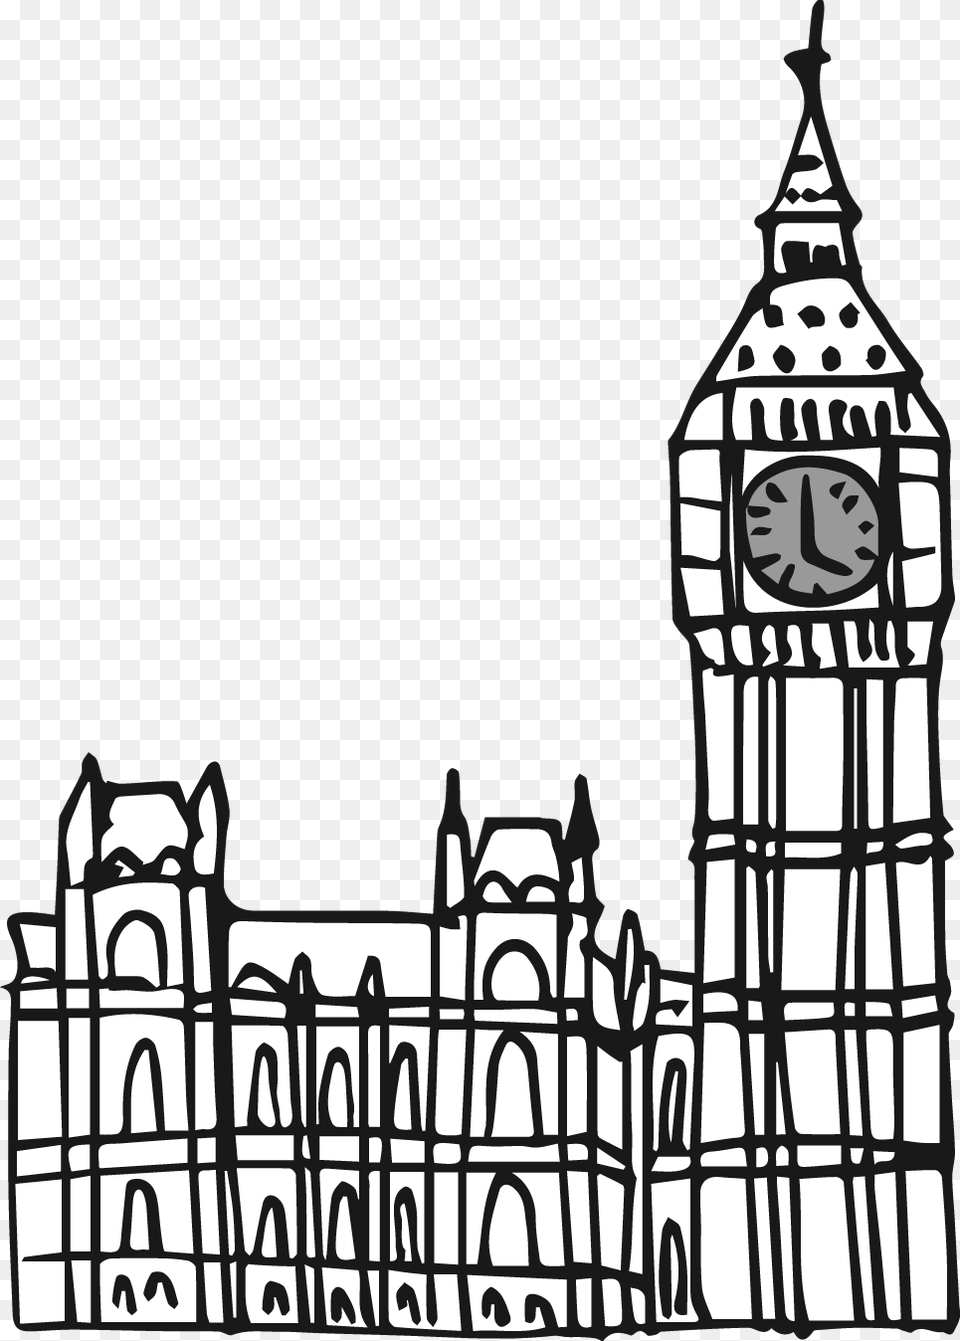 Drawn Big Ben England Big Ben England Drawing, Architecture, Building, Clock Tower, Tower Png Image